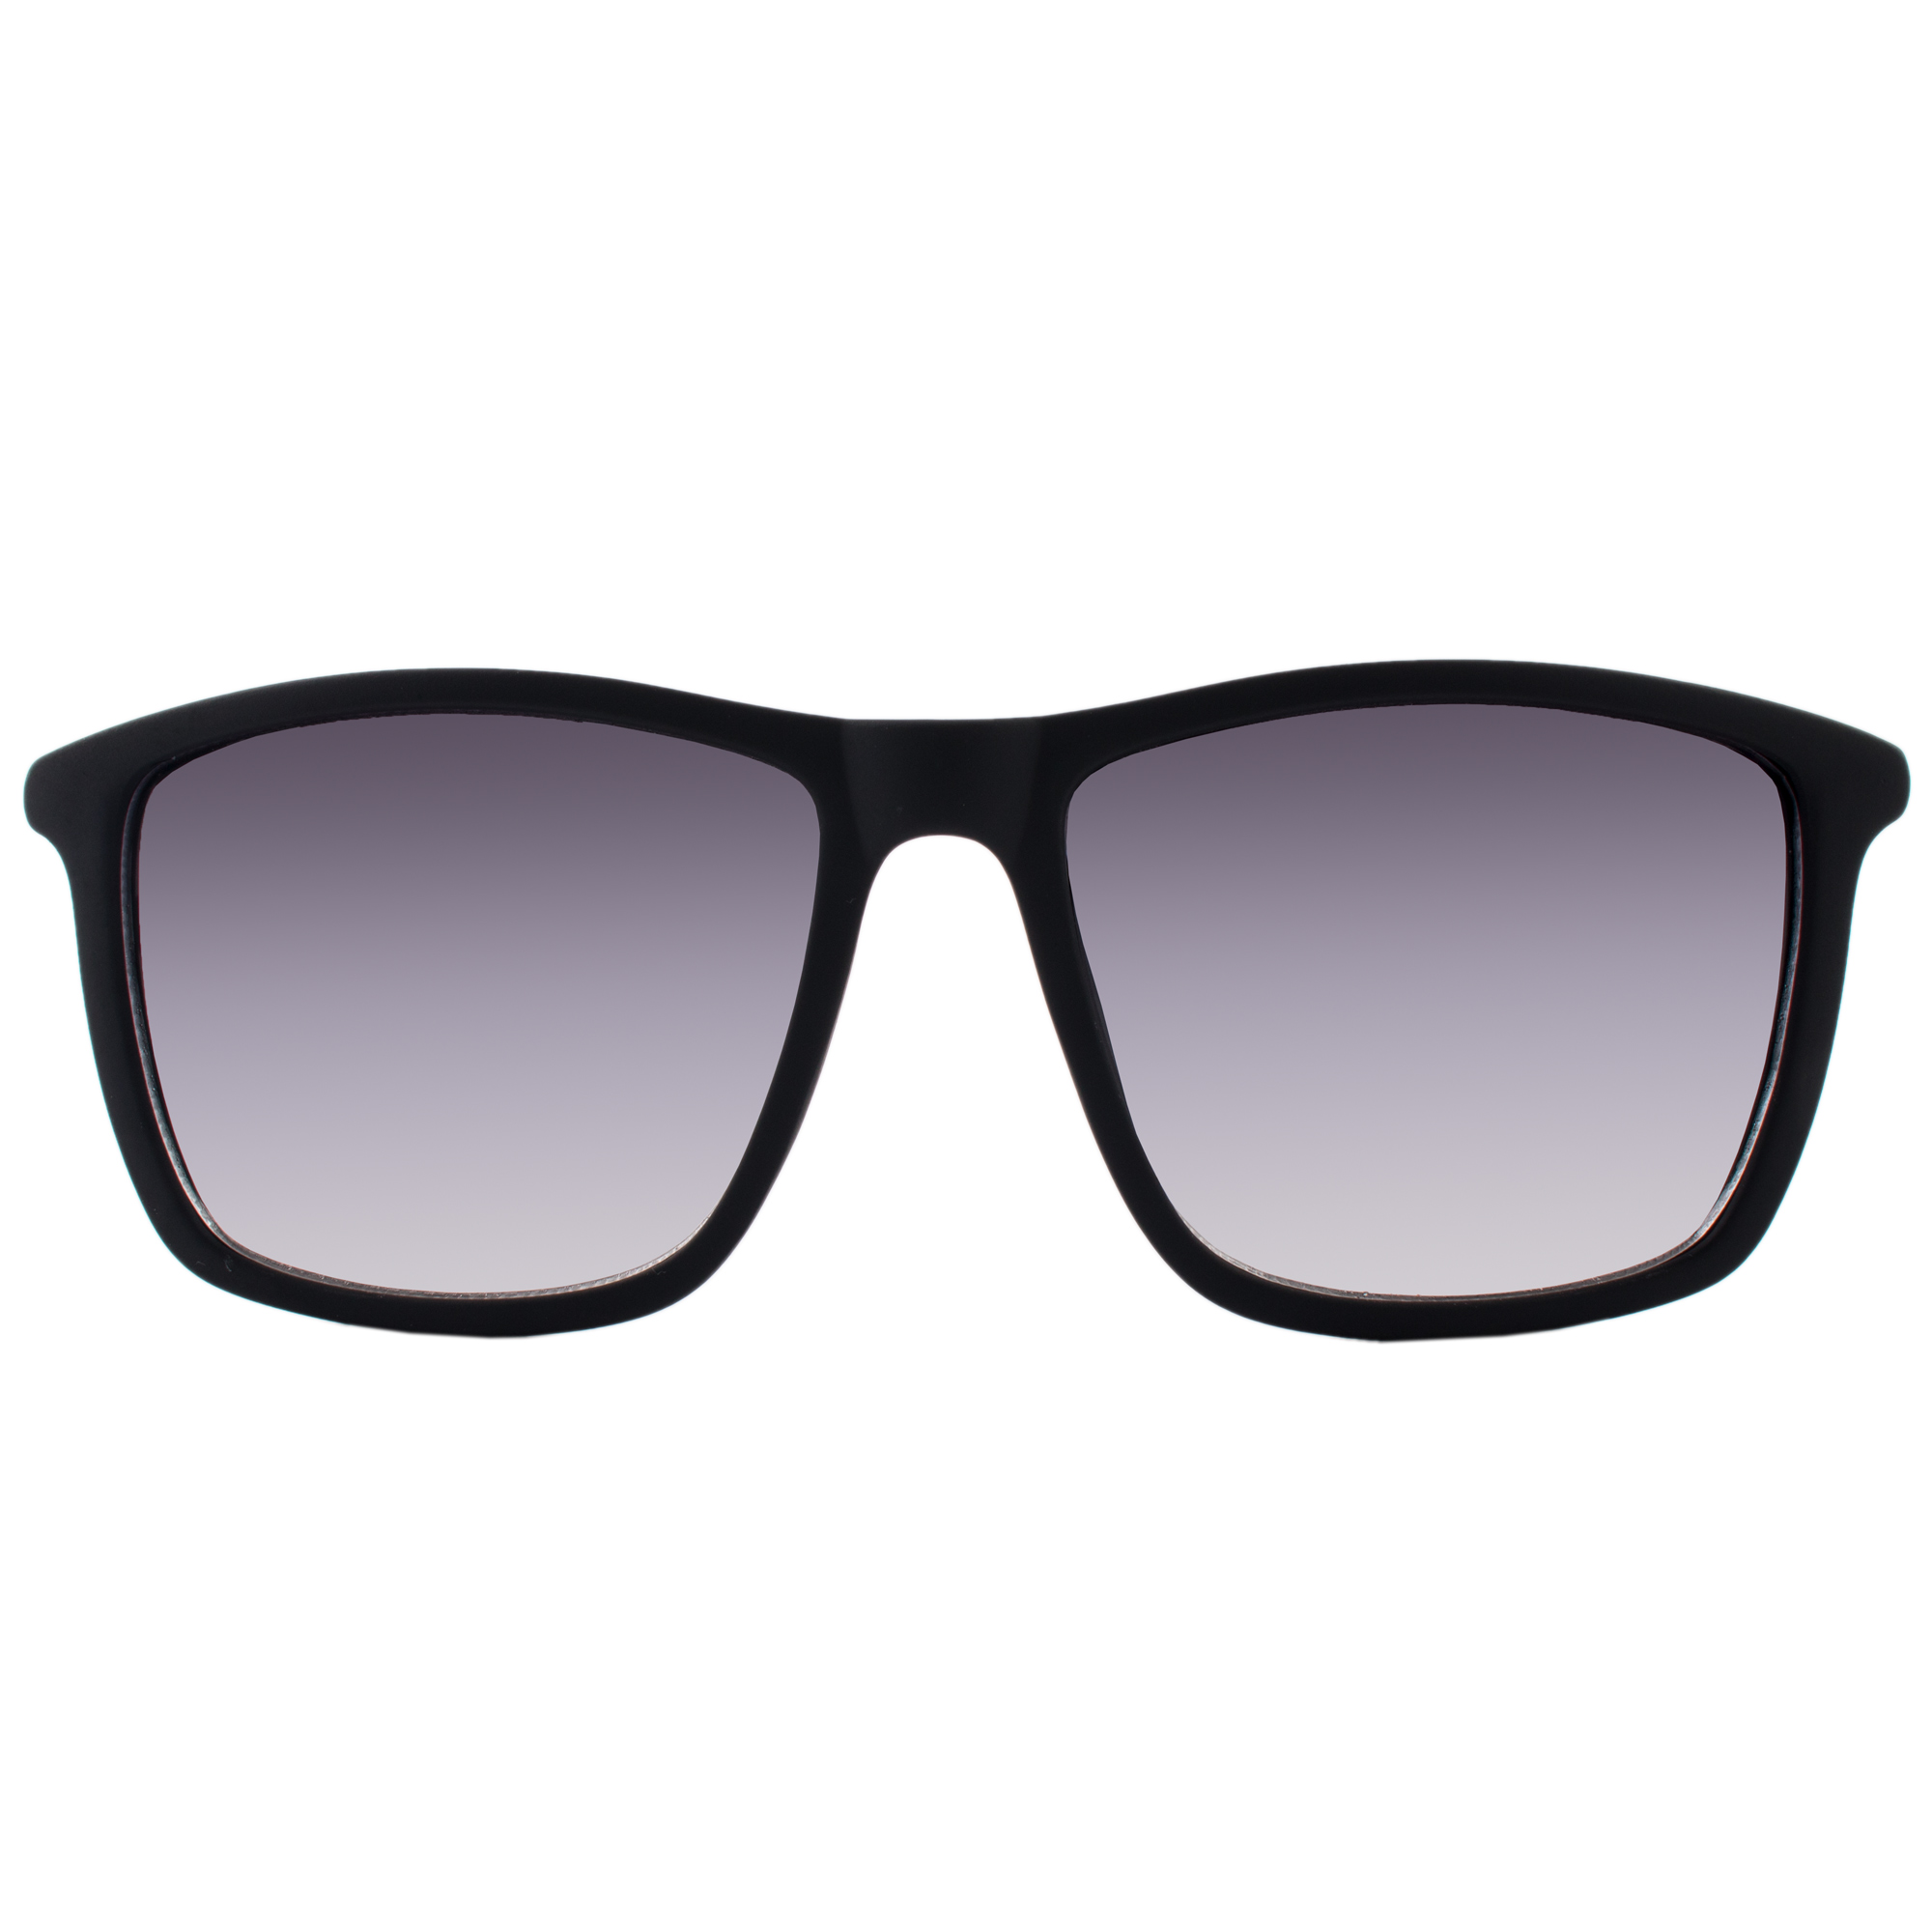 عینک آفتابی مدل VATE-OGA315